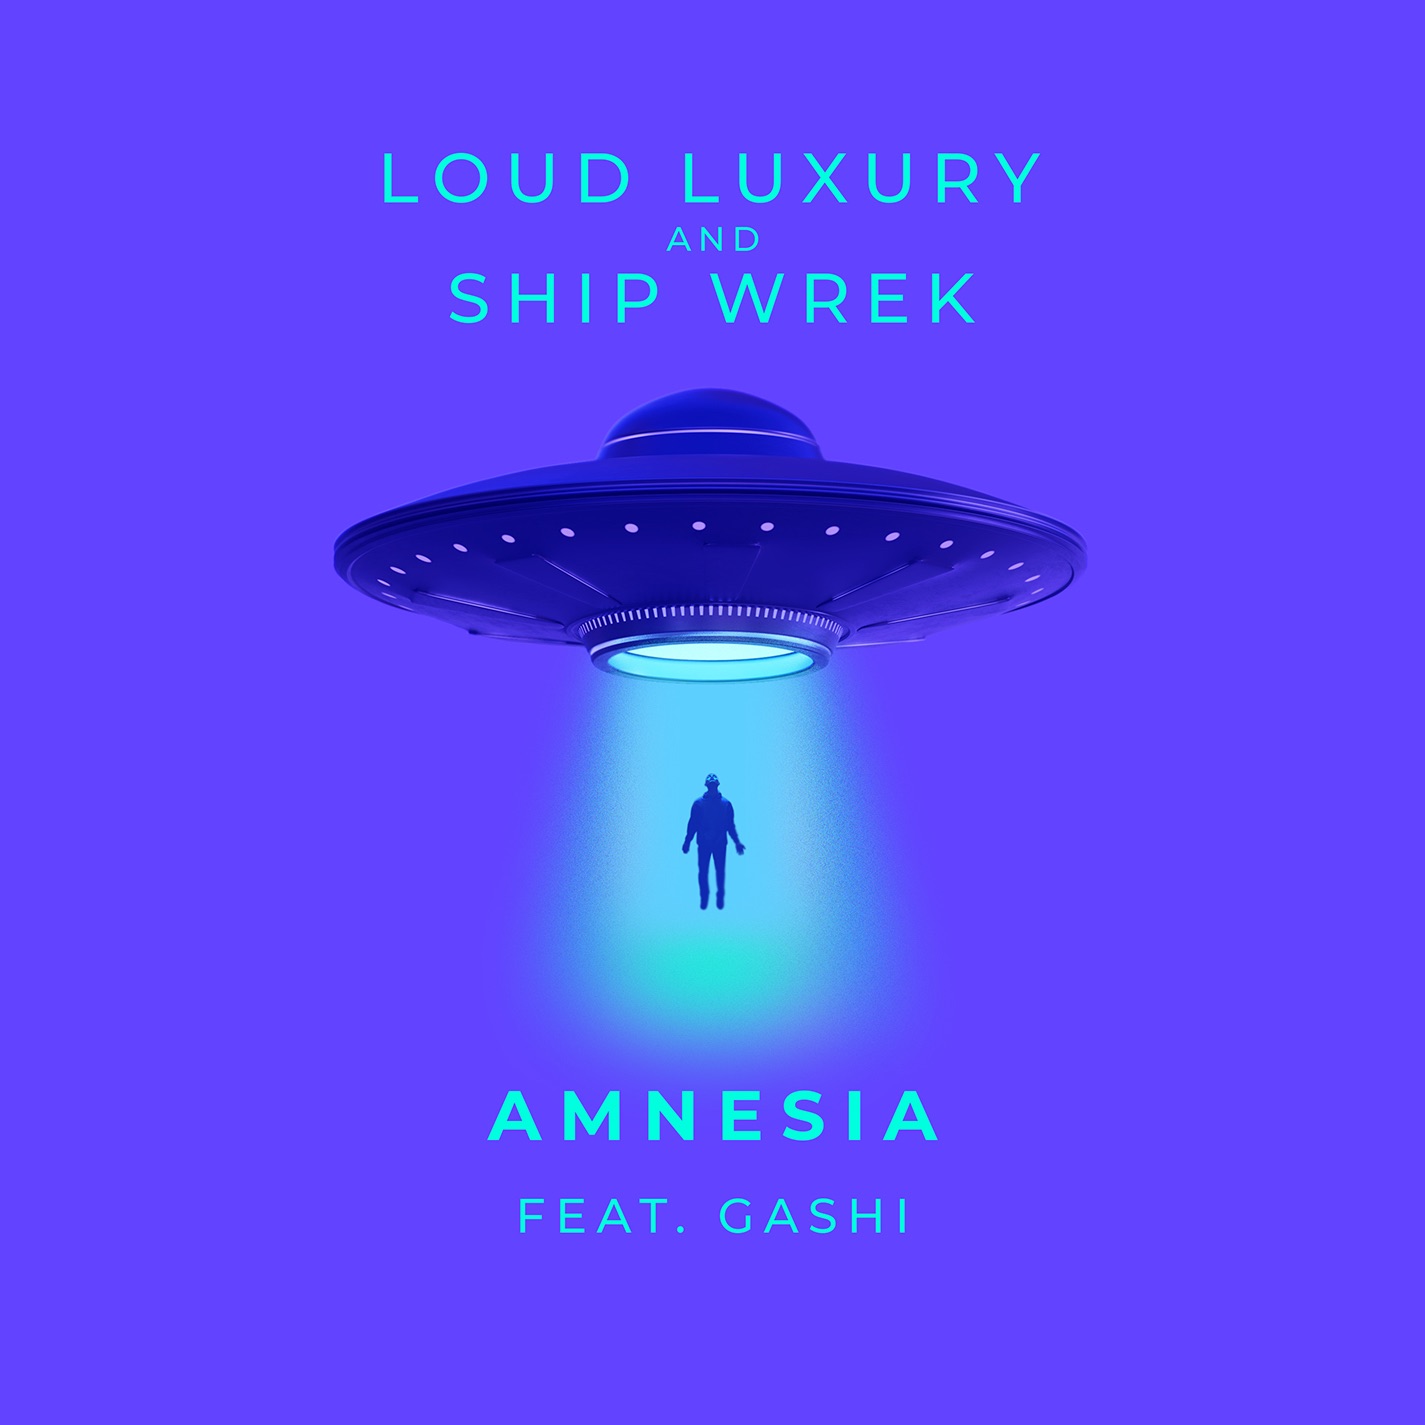 Loud Luxury & Ship Wrek - Amnesia (feat. GASHI) - Single